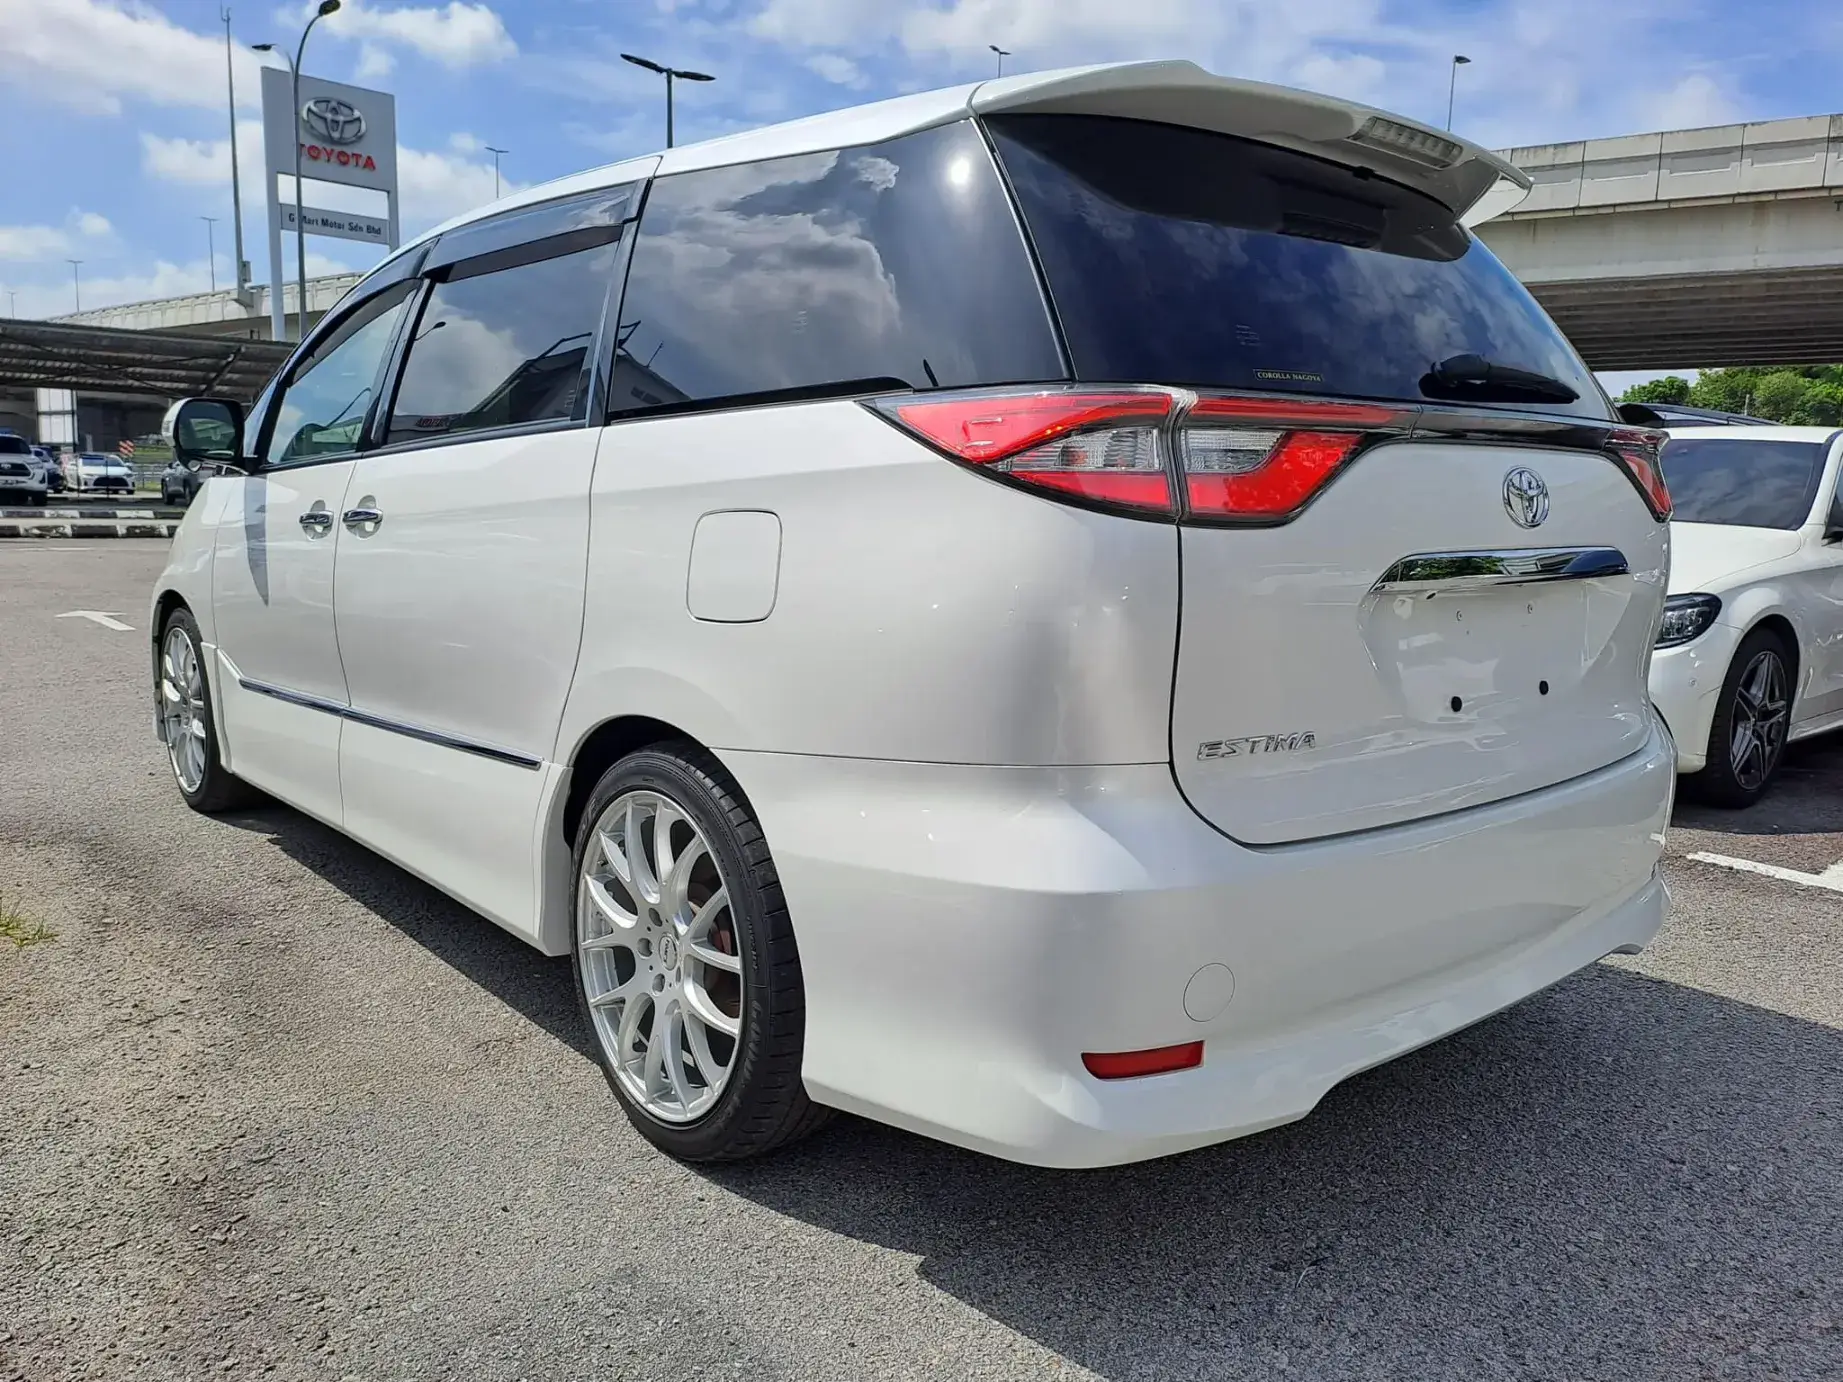 Toyota Estima for Sale in Kenya